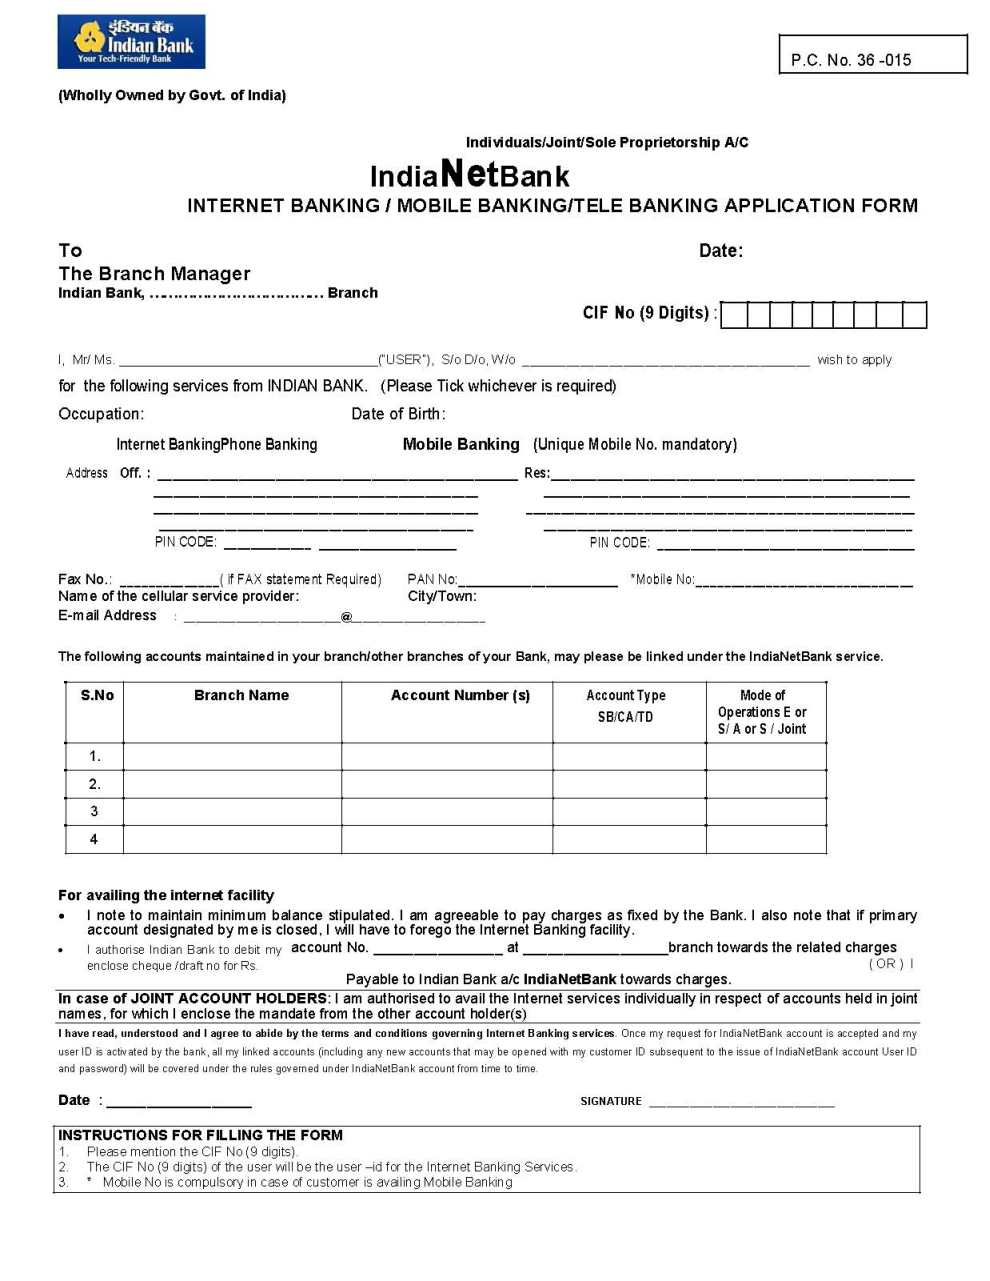 Indian Bank Net Banking Application 2019 2020 2021 MBA